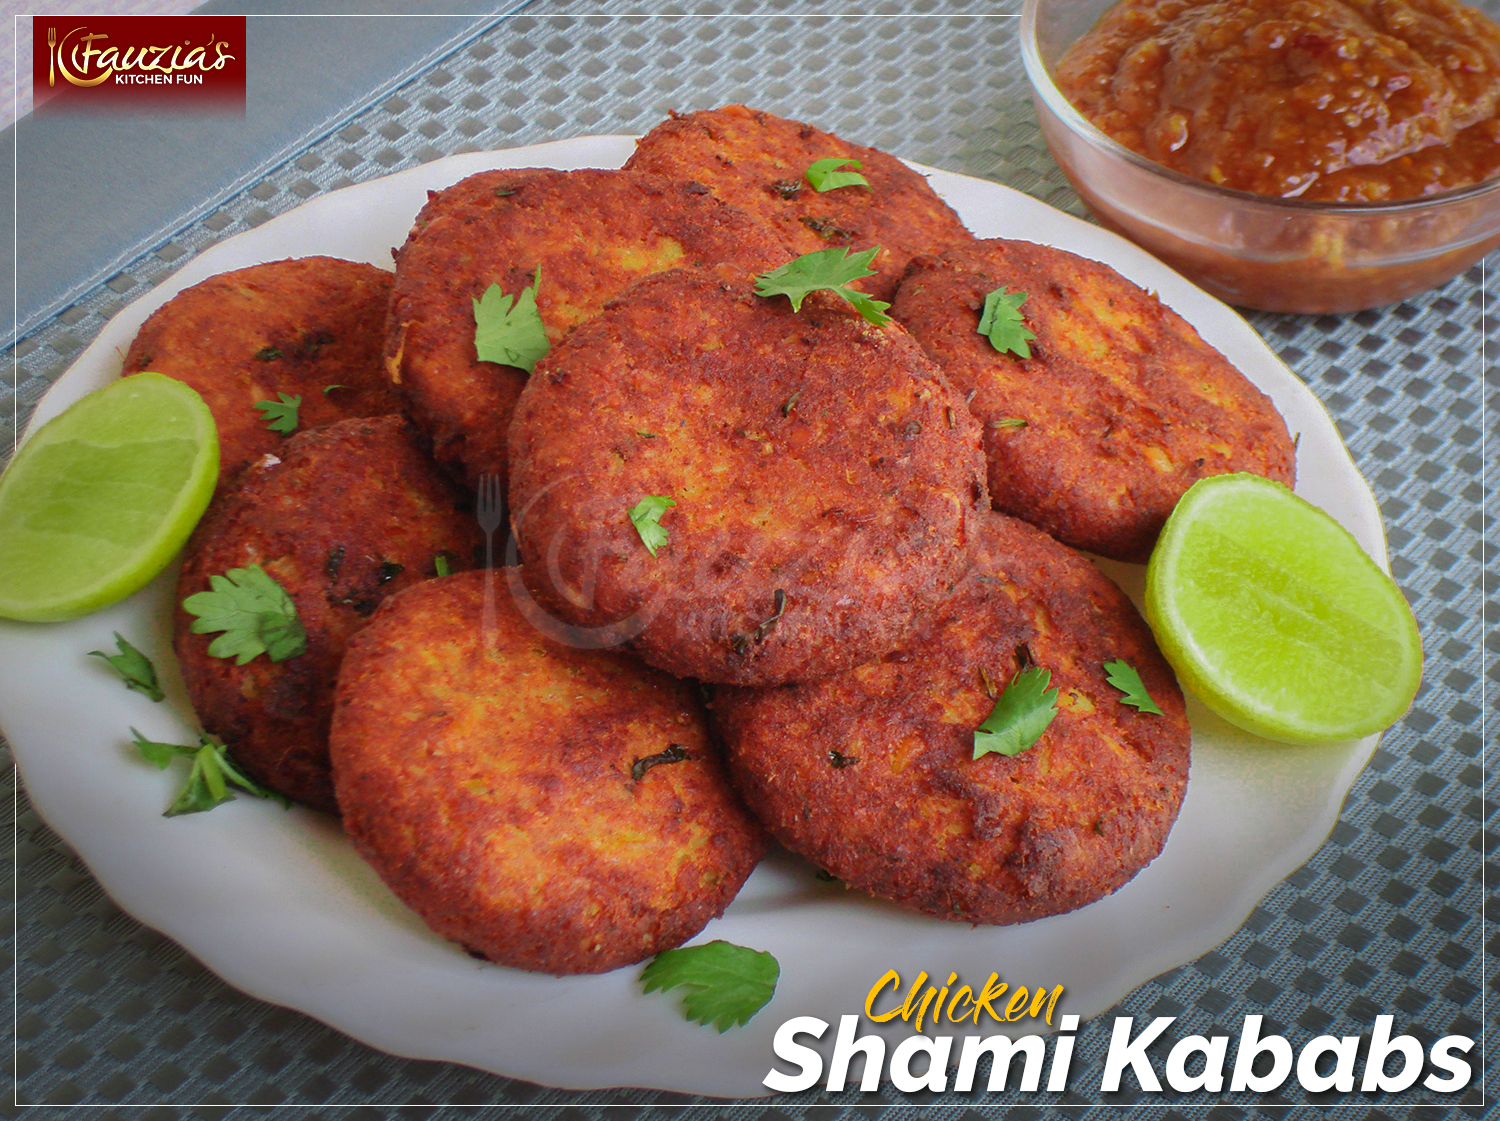 Chicken Shami Kababs Fauzia s Kitchen Fun